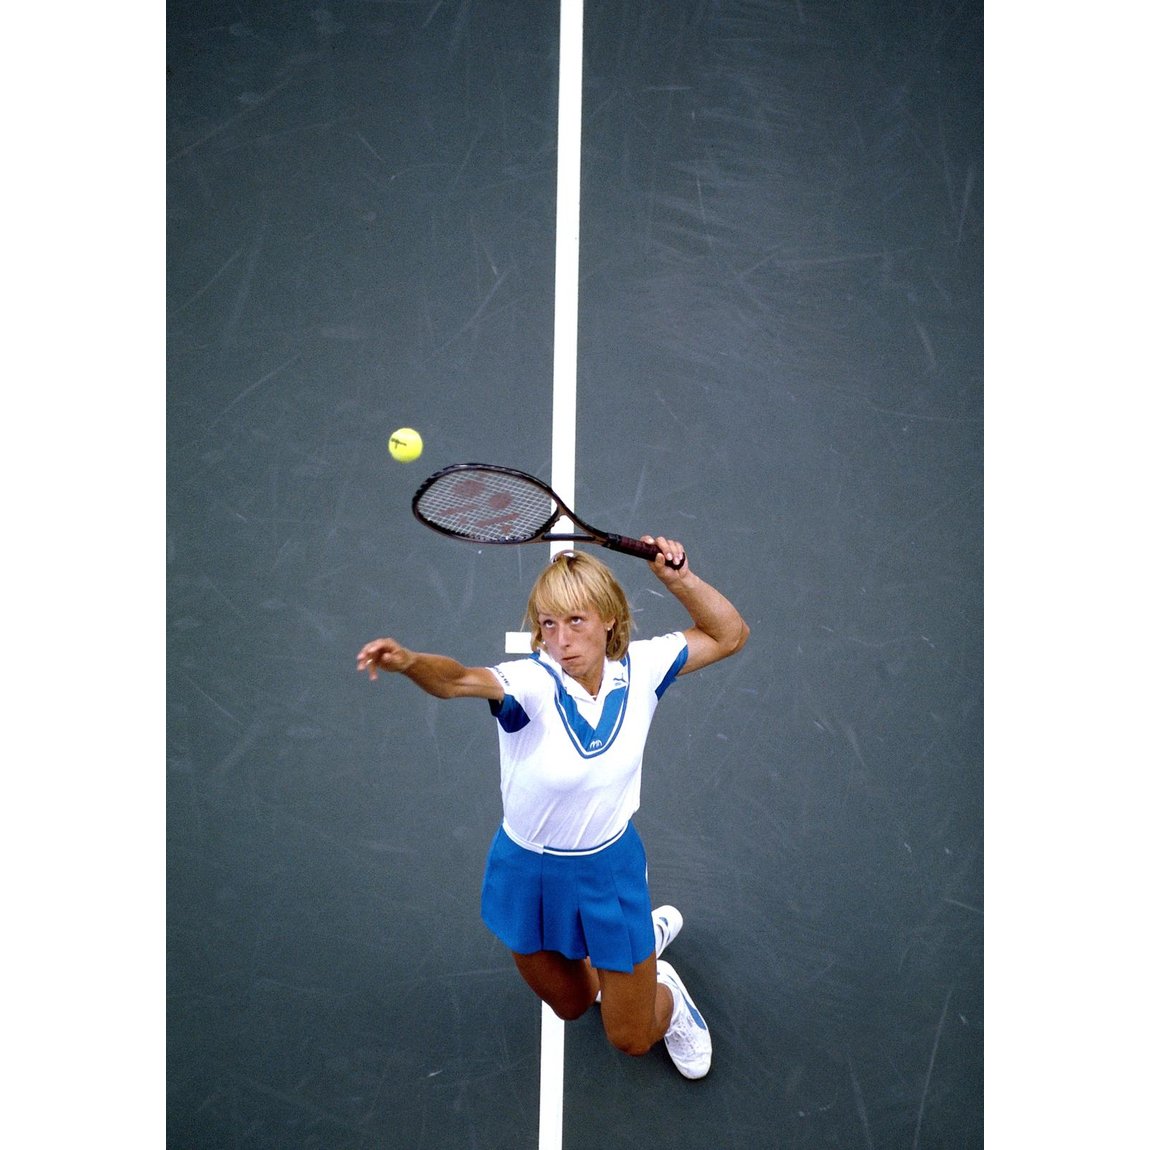 Martina Navratilova serves during the 1984 US Open at the National Tennis Center in Flushing, New York. September 1984. #NeilLeifer #Photography #Tennis #USOpen #Flushing #NewYork #MartinaNavratilova